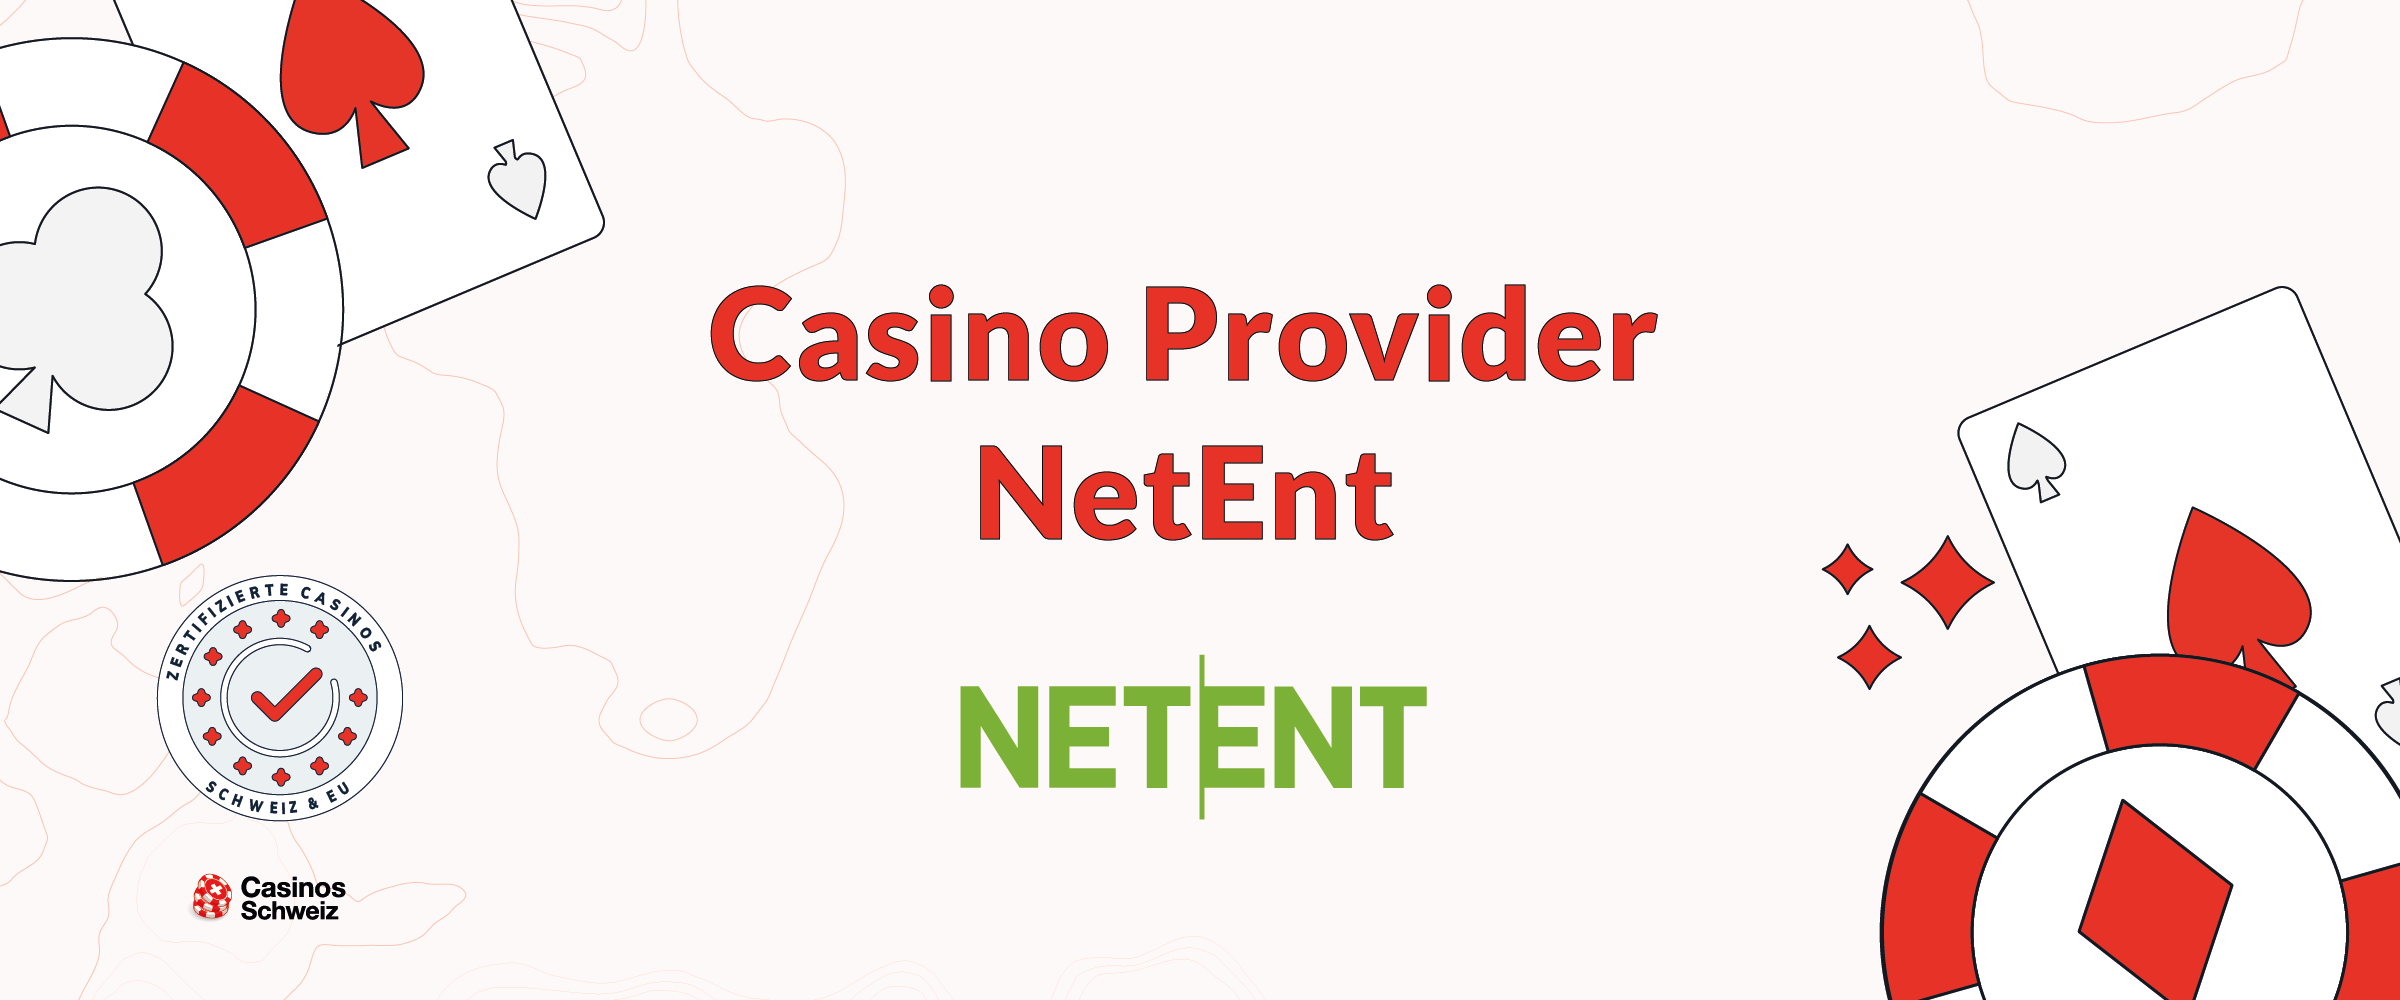 Casino Provider NetEnt